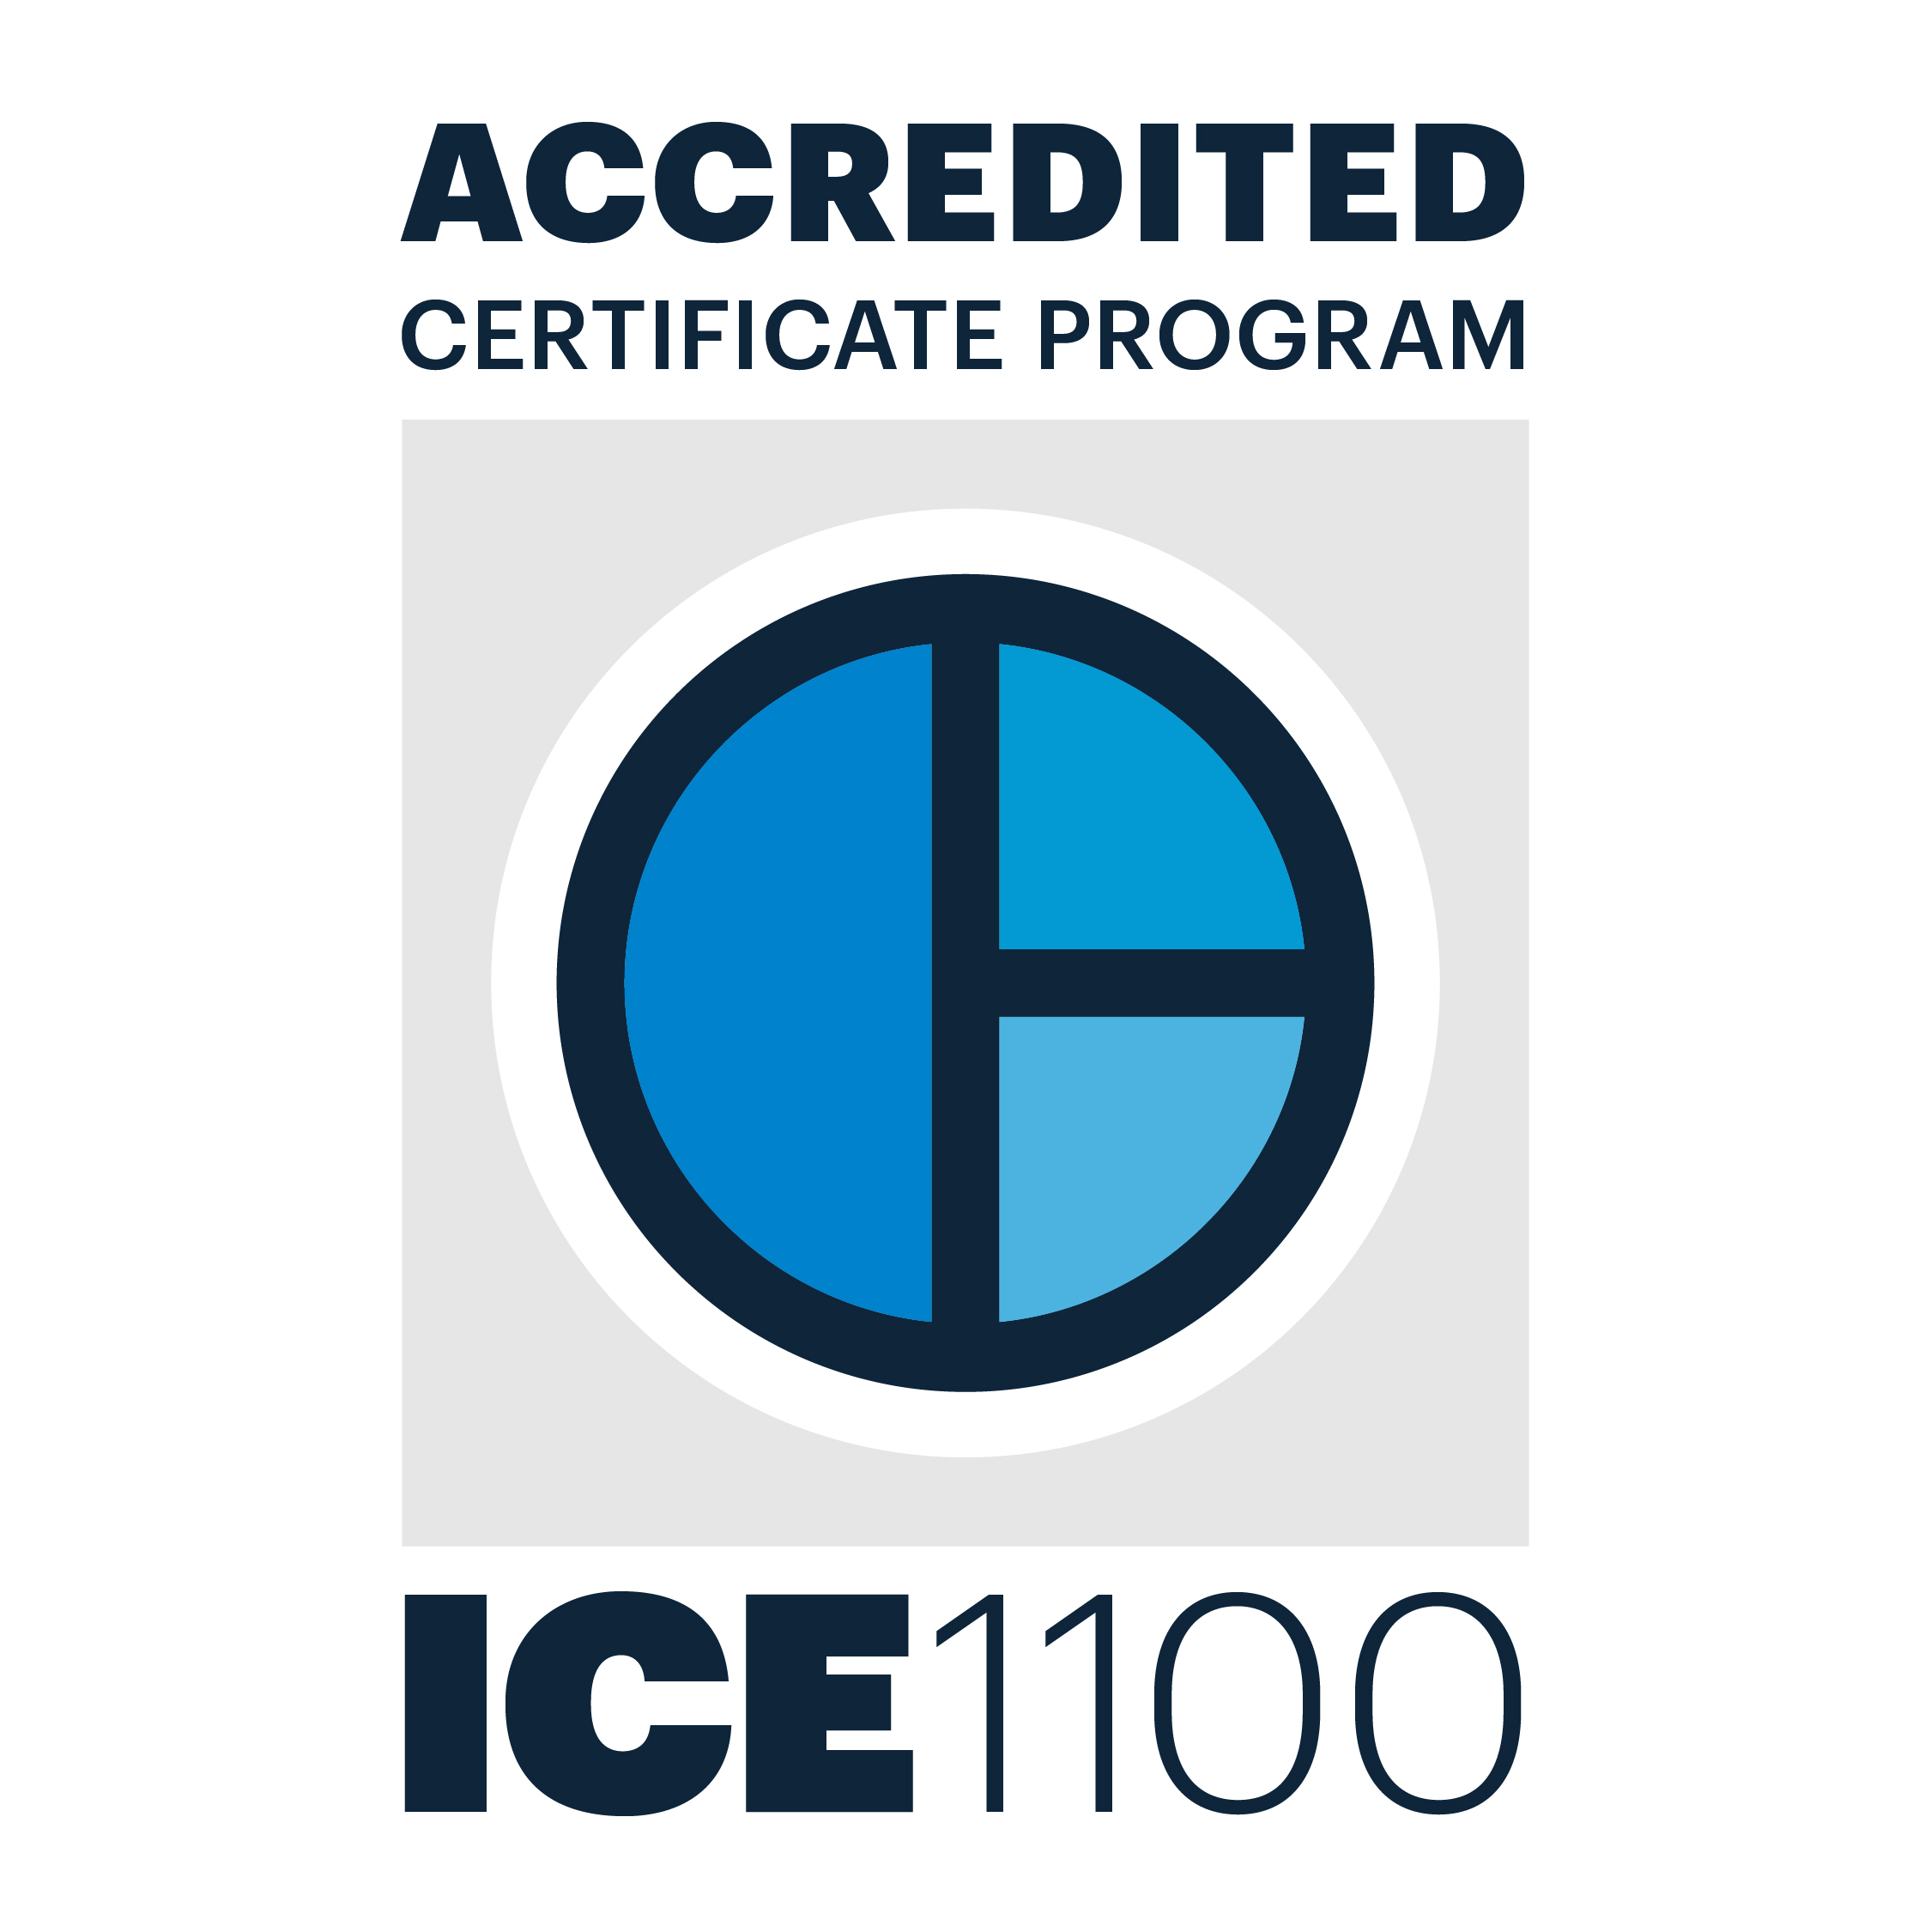 ICE Accredited Certificate Program